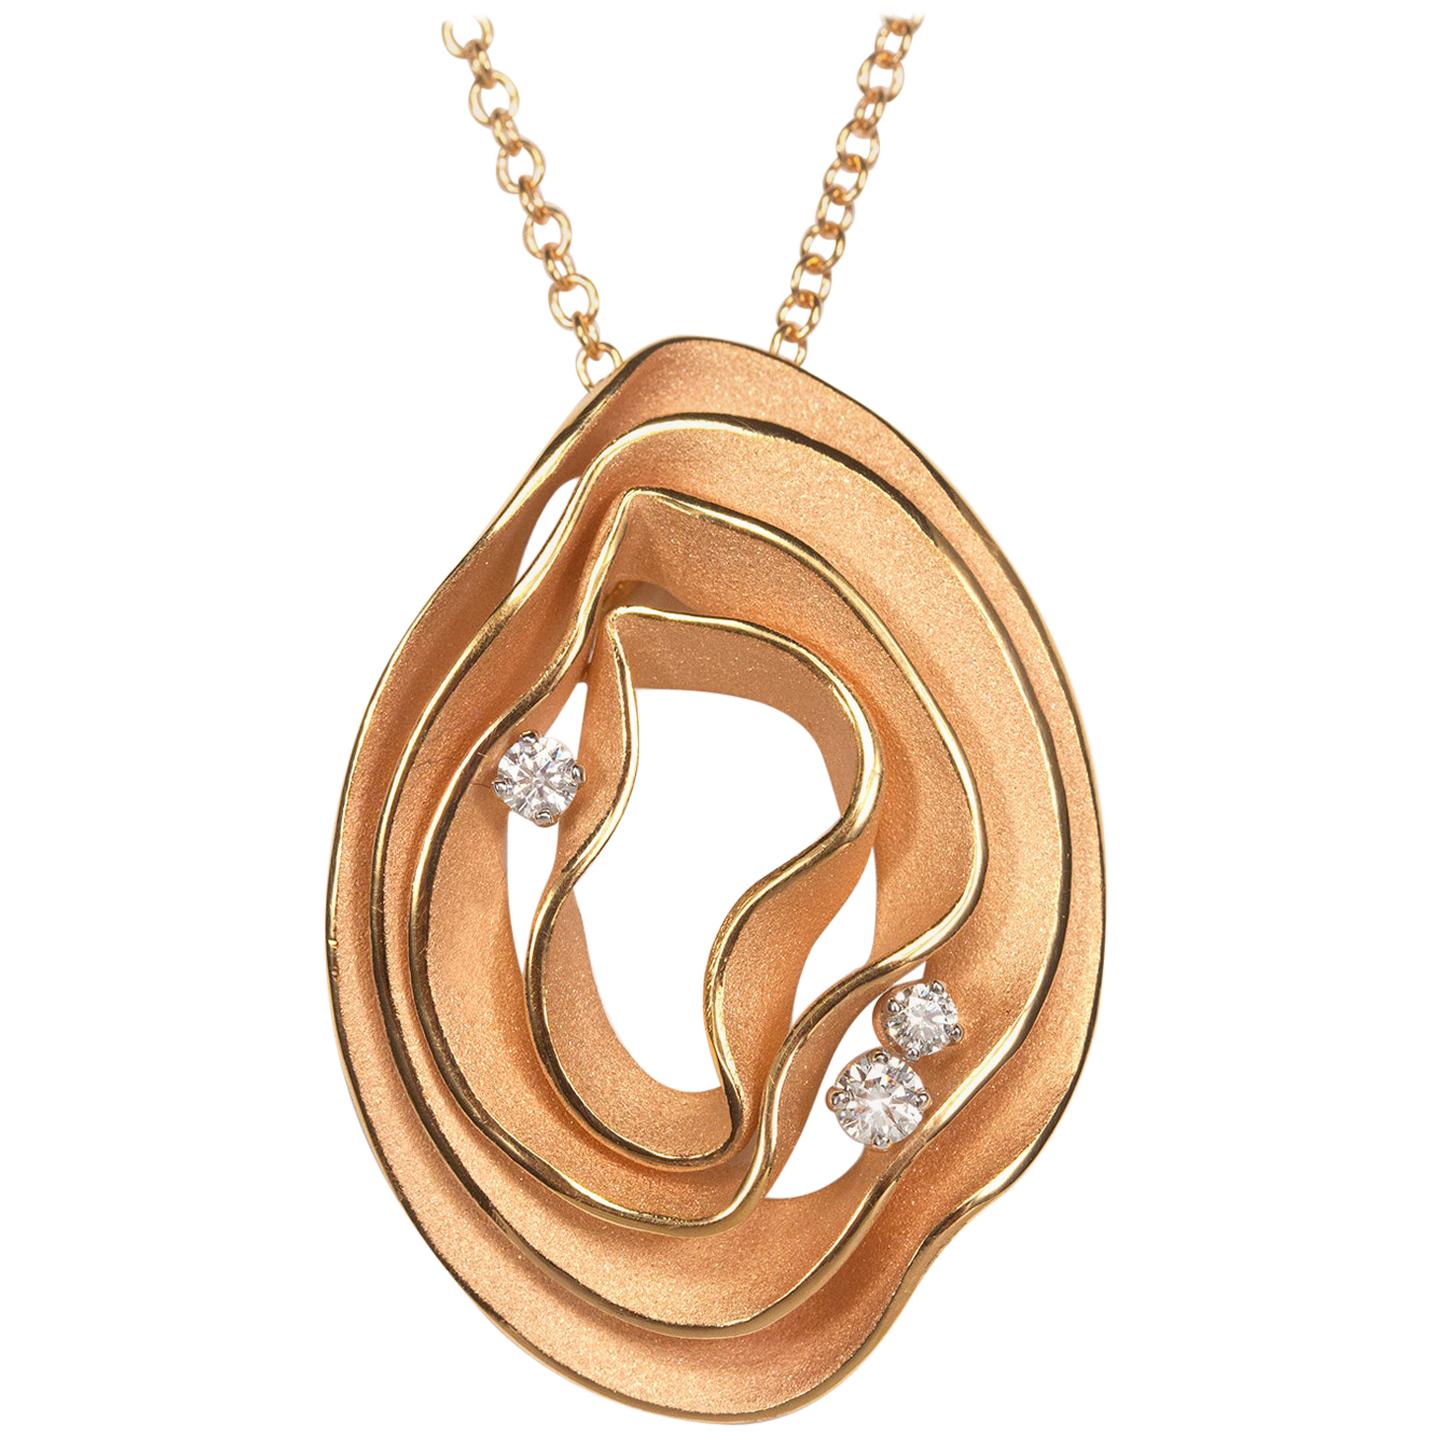 Annamaria Cammilli "Dune" Pendant Necklace with Diamonds in 18 Karat Pink Gold